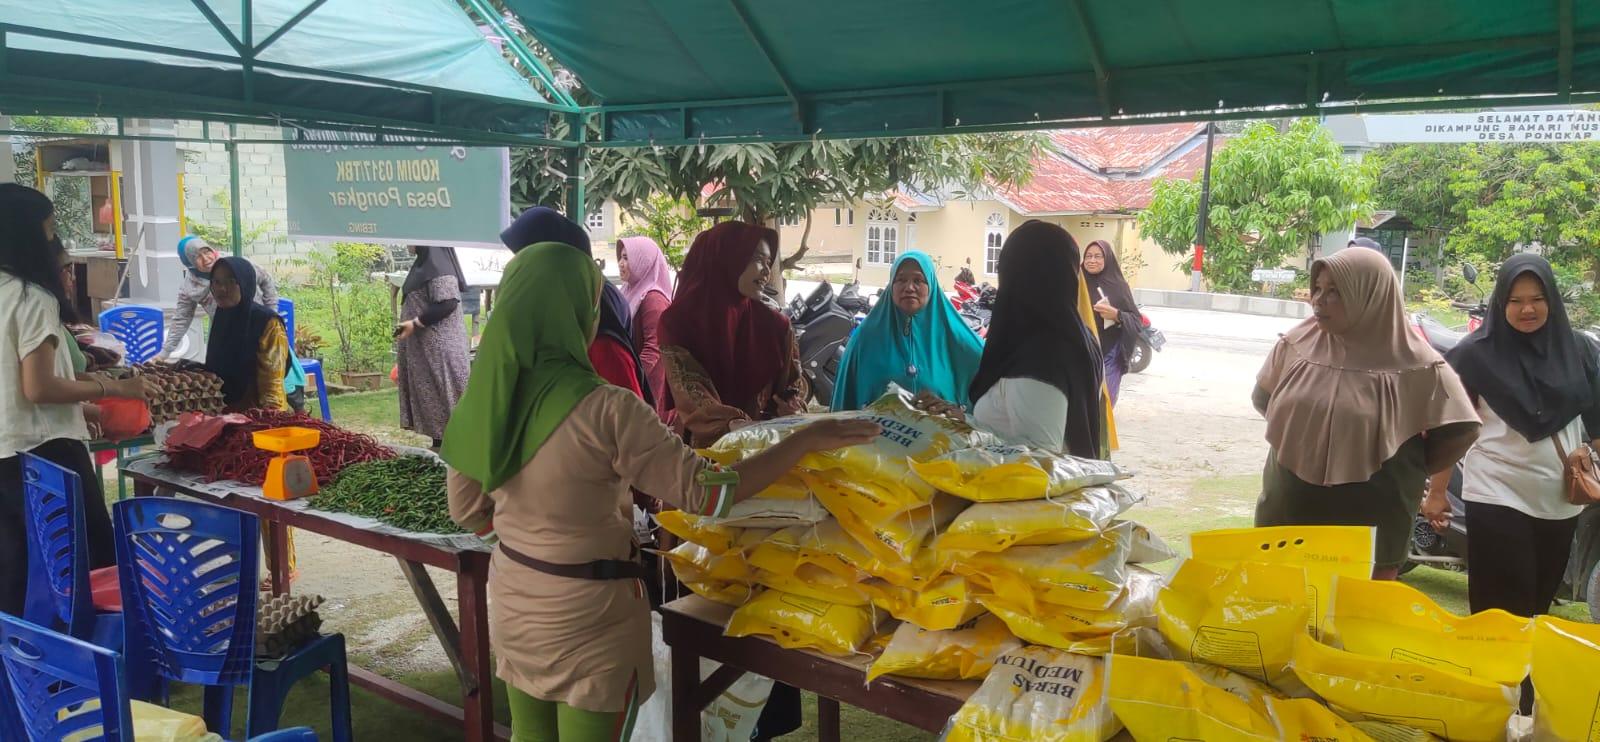 Kodim 0317/TBK beserta elemen Masyarakat melaksanakan kegiatan Bazar Murah